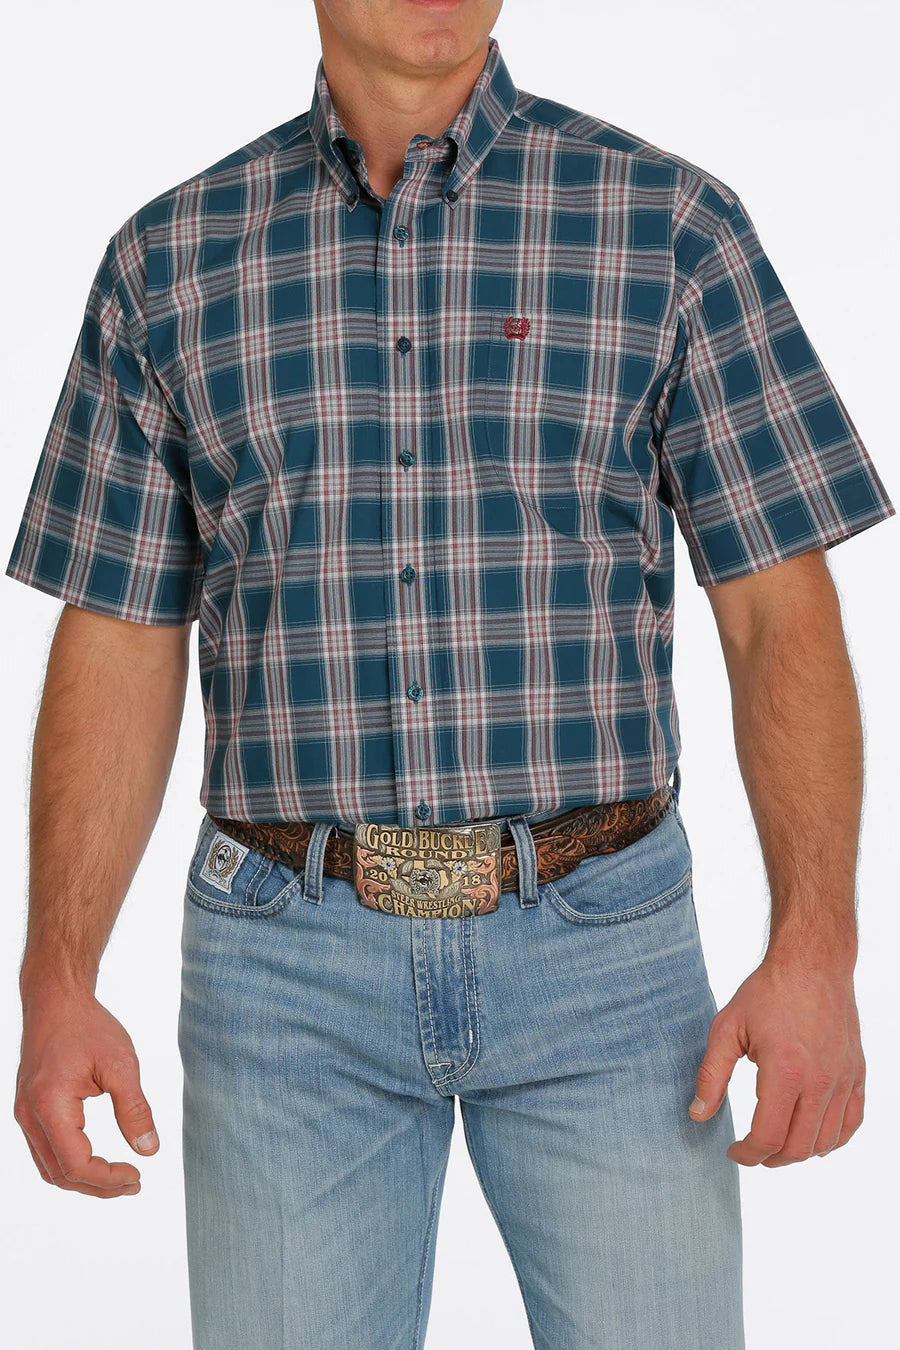 Cinch Men's Teal Plaid Short Sleeve Shirt